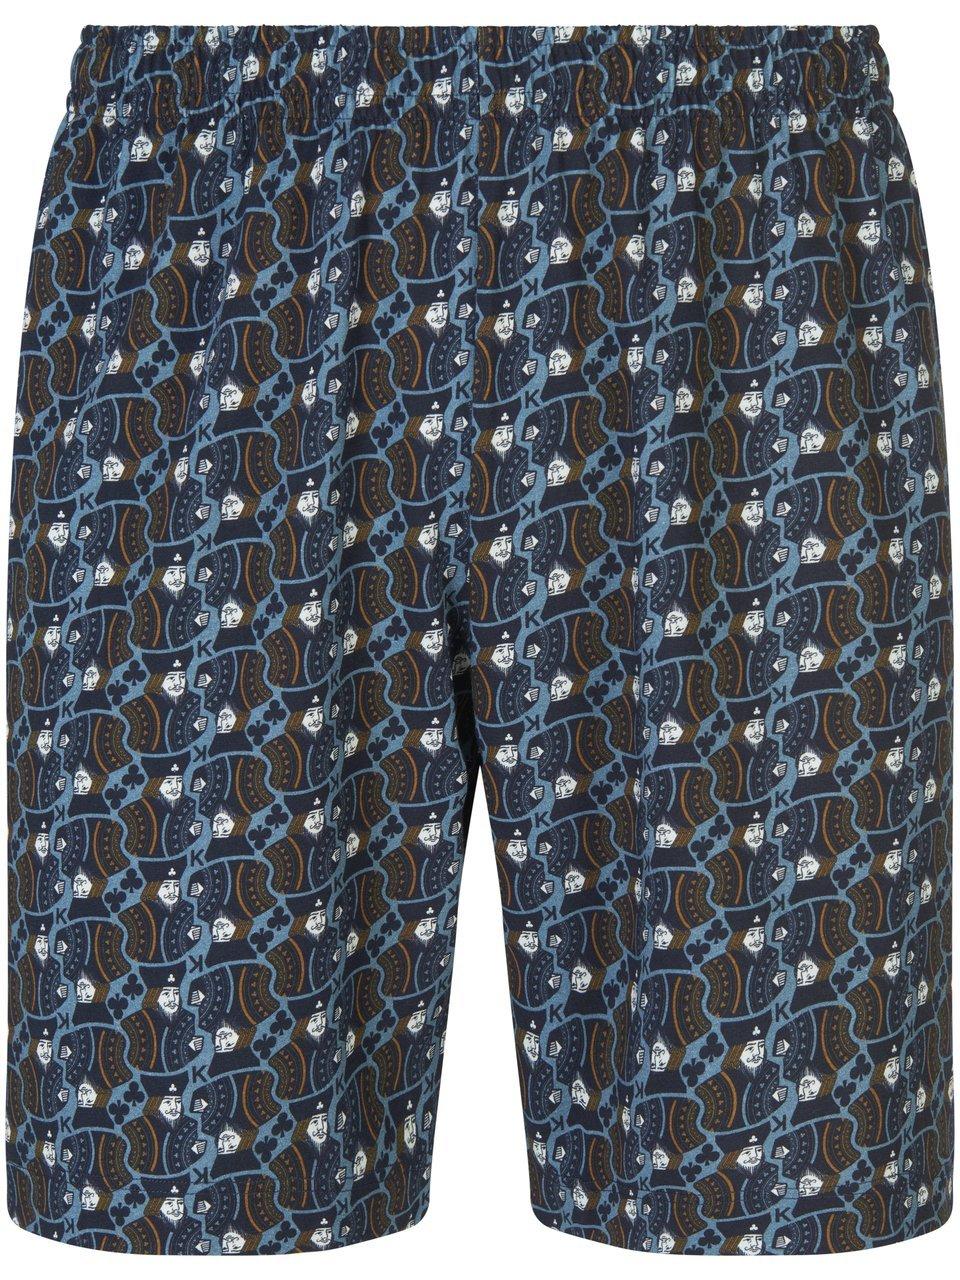 Pyjamashort Van Mey blauw